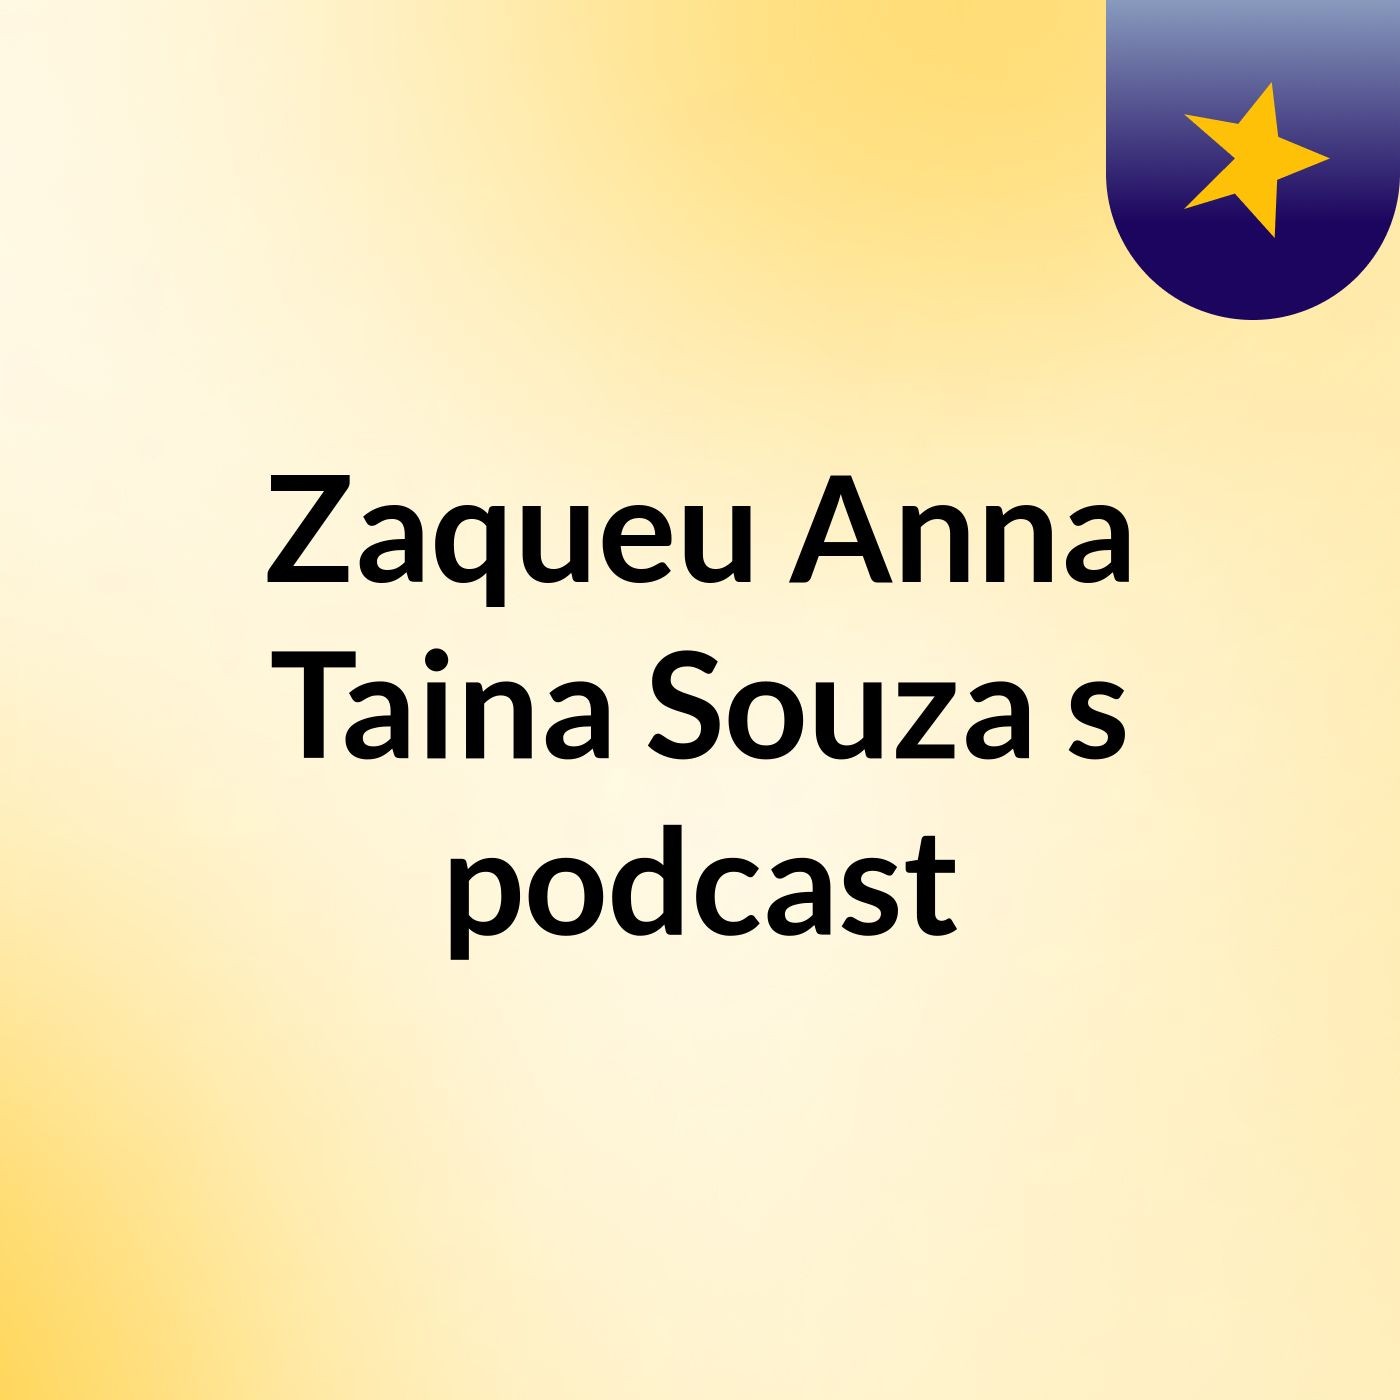 Zaqueu Anna Taina Souza's podcast